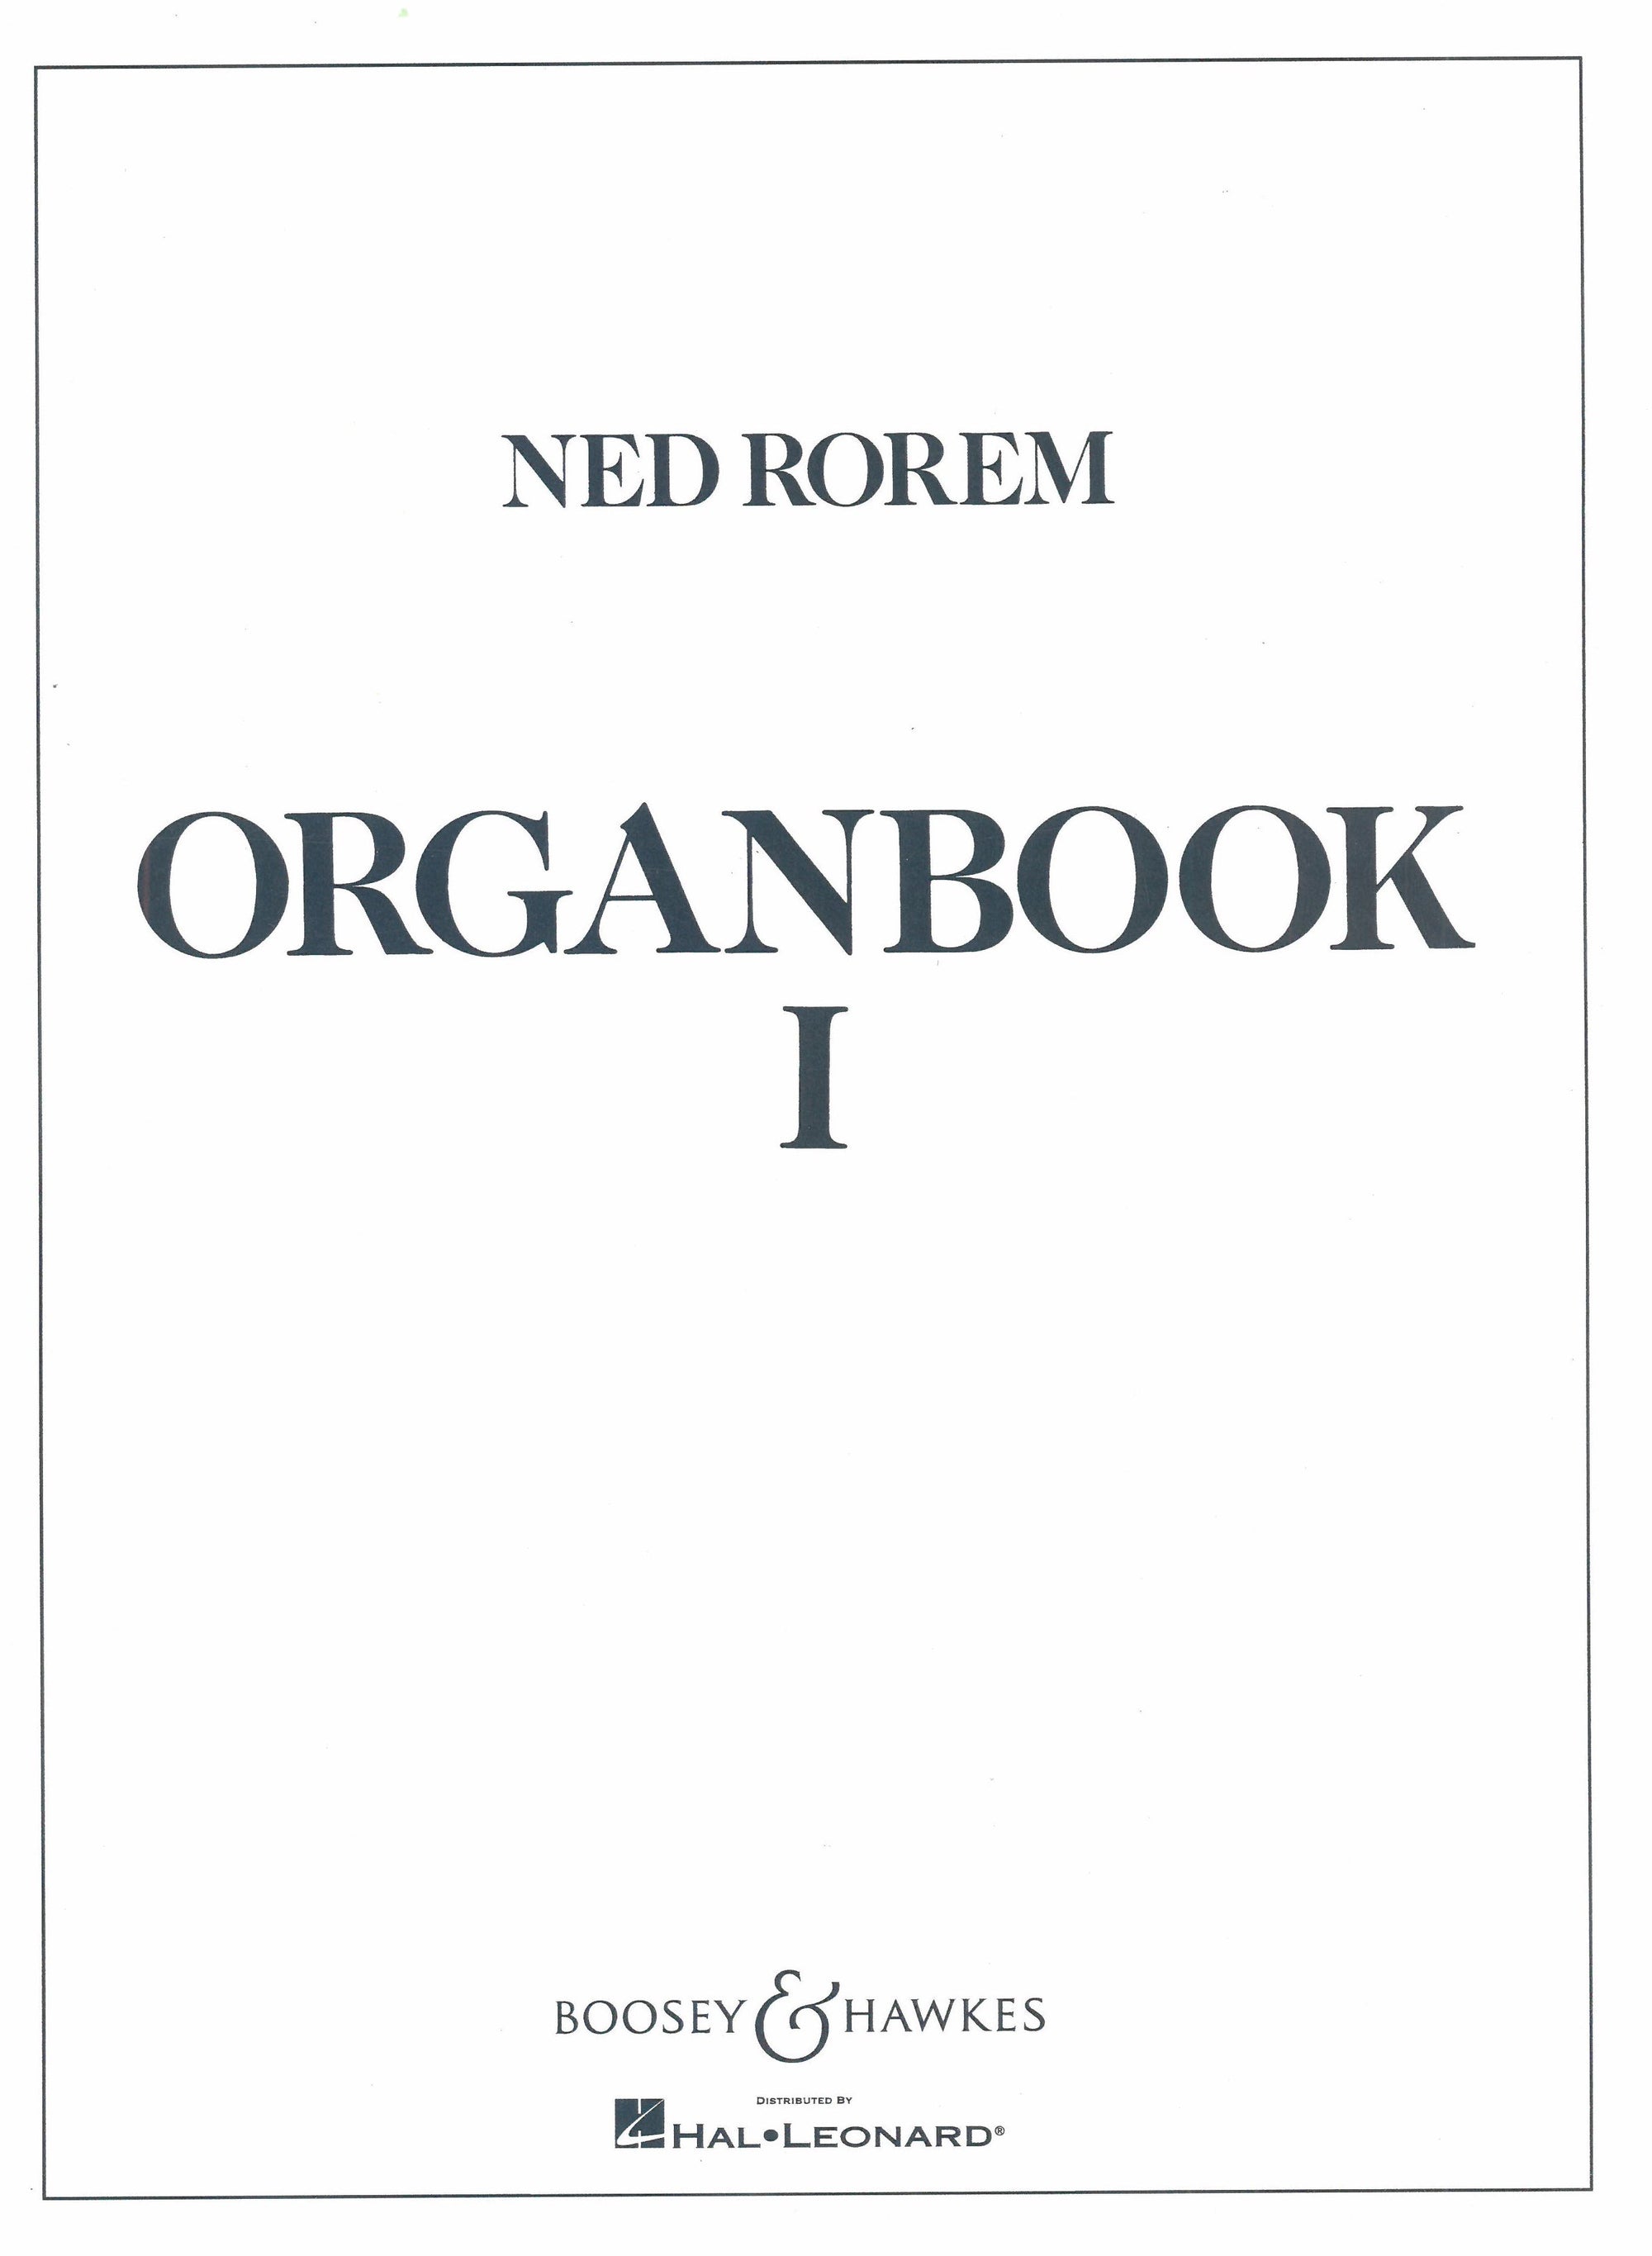 Rorem: Organbook I